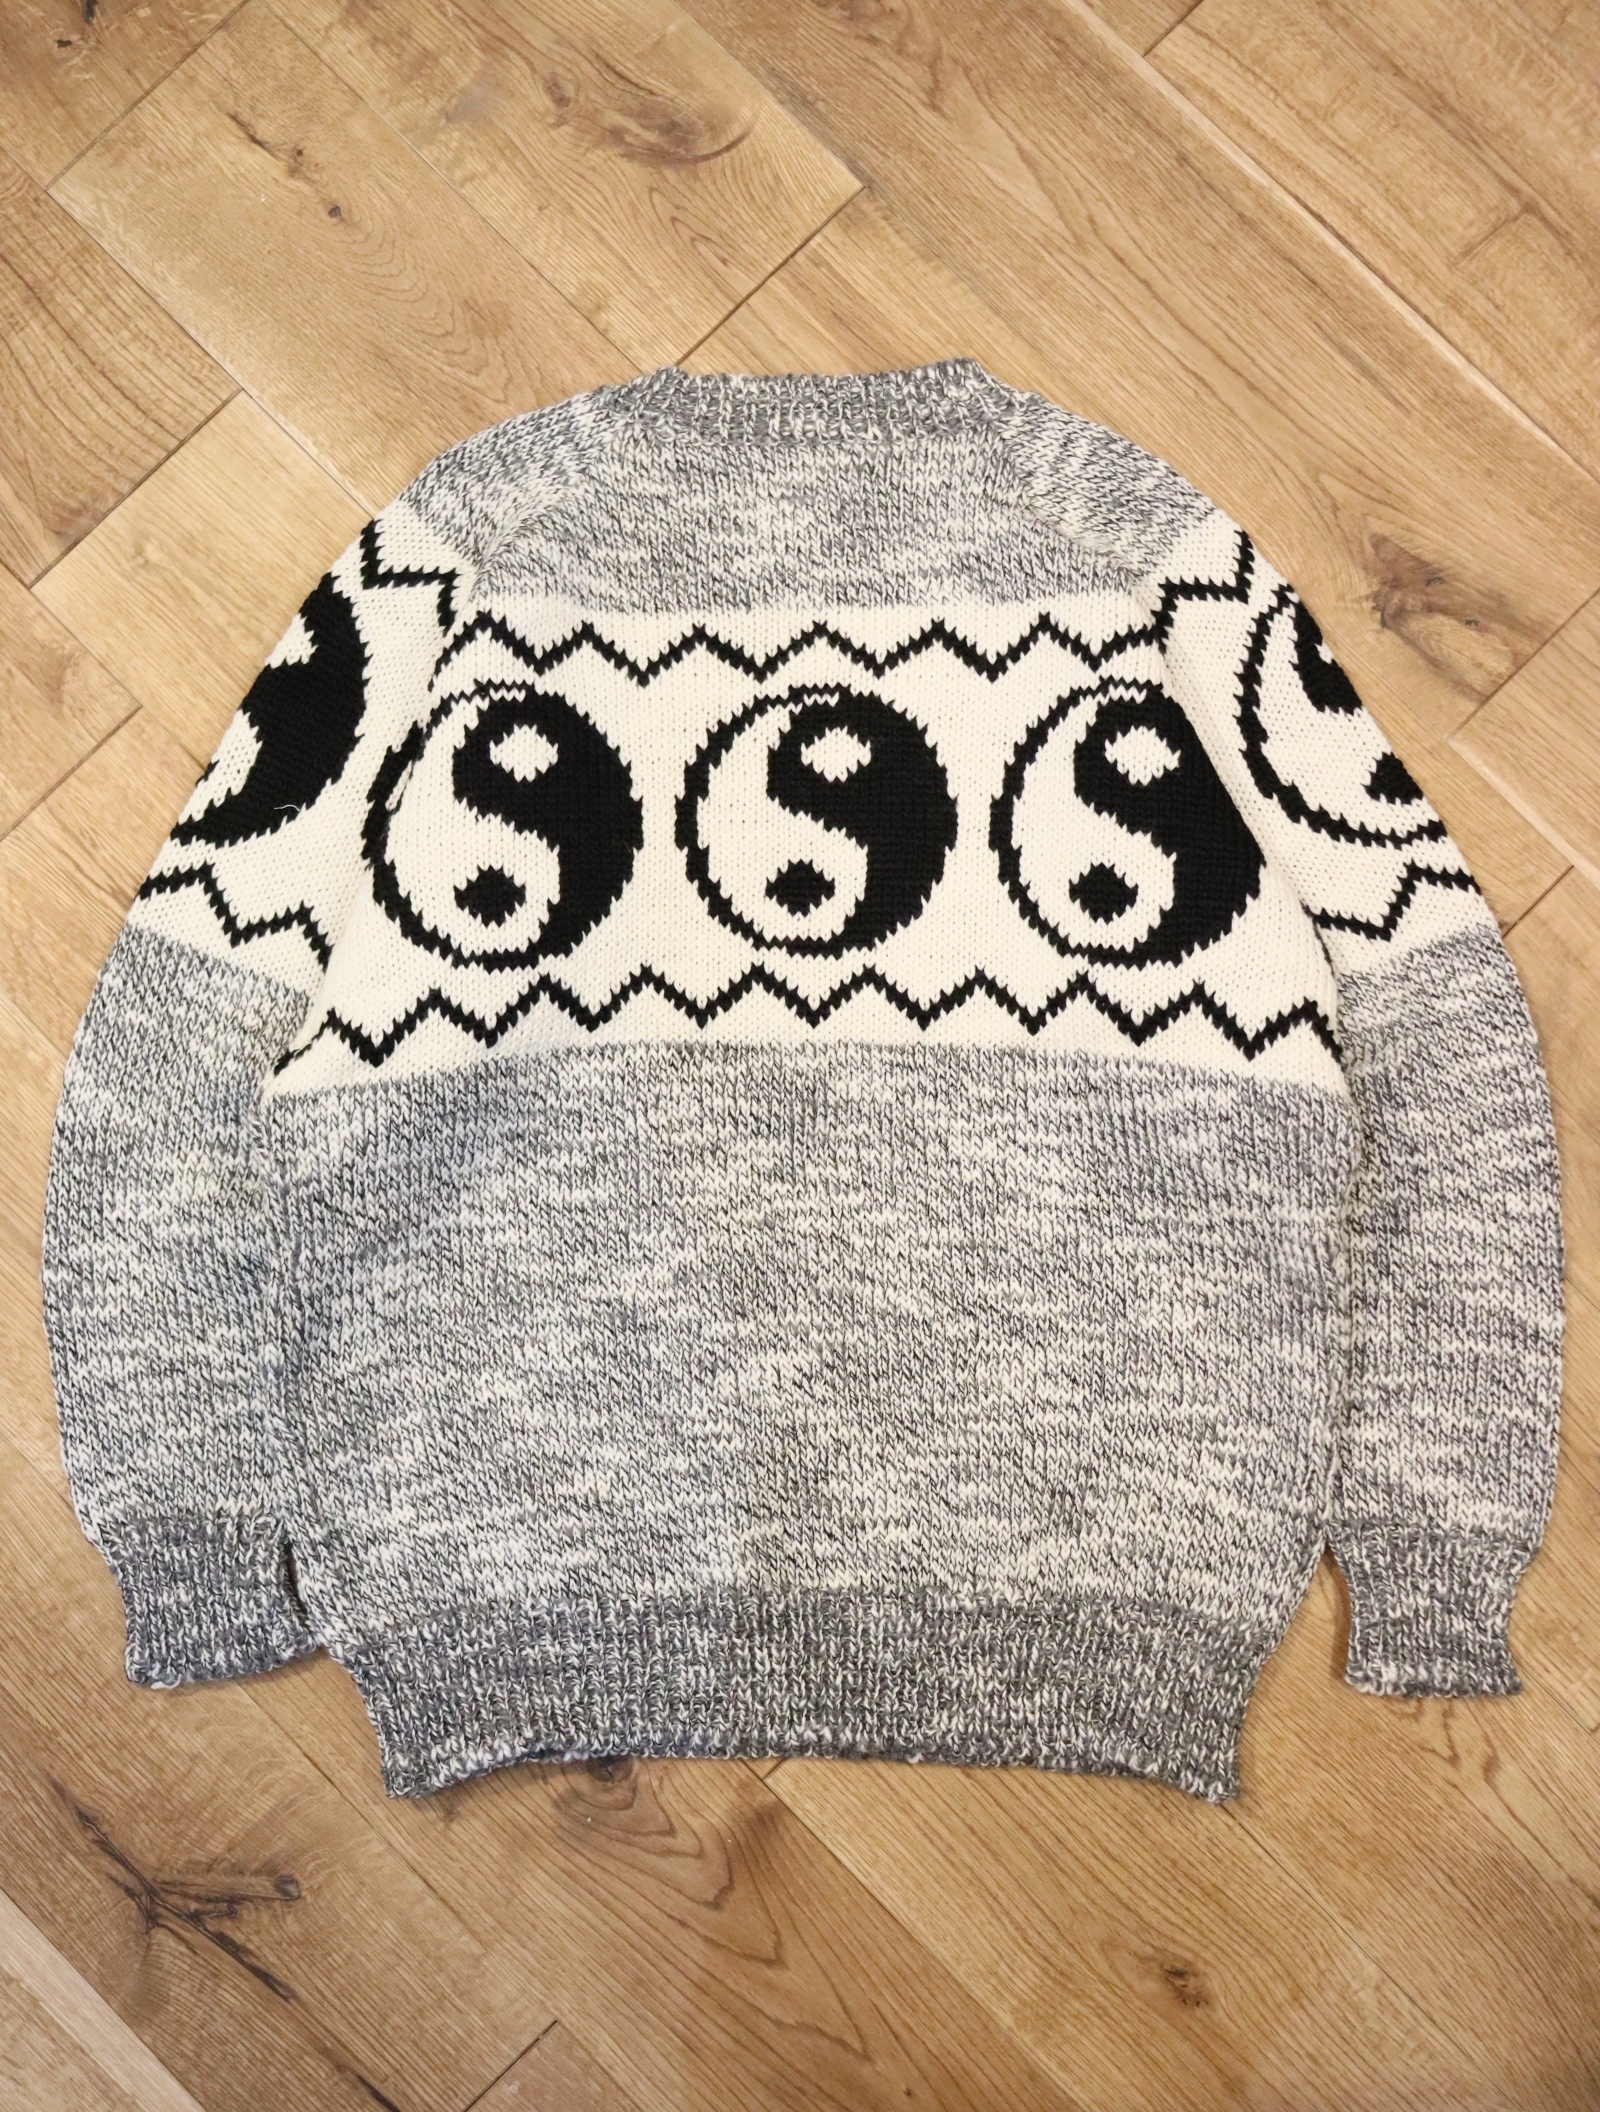 Black Weirdos 「Yin-Yang Sweater」 ニットセーター MASH UP マッシュ